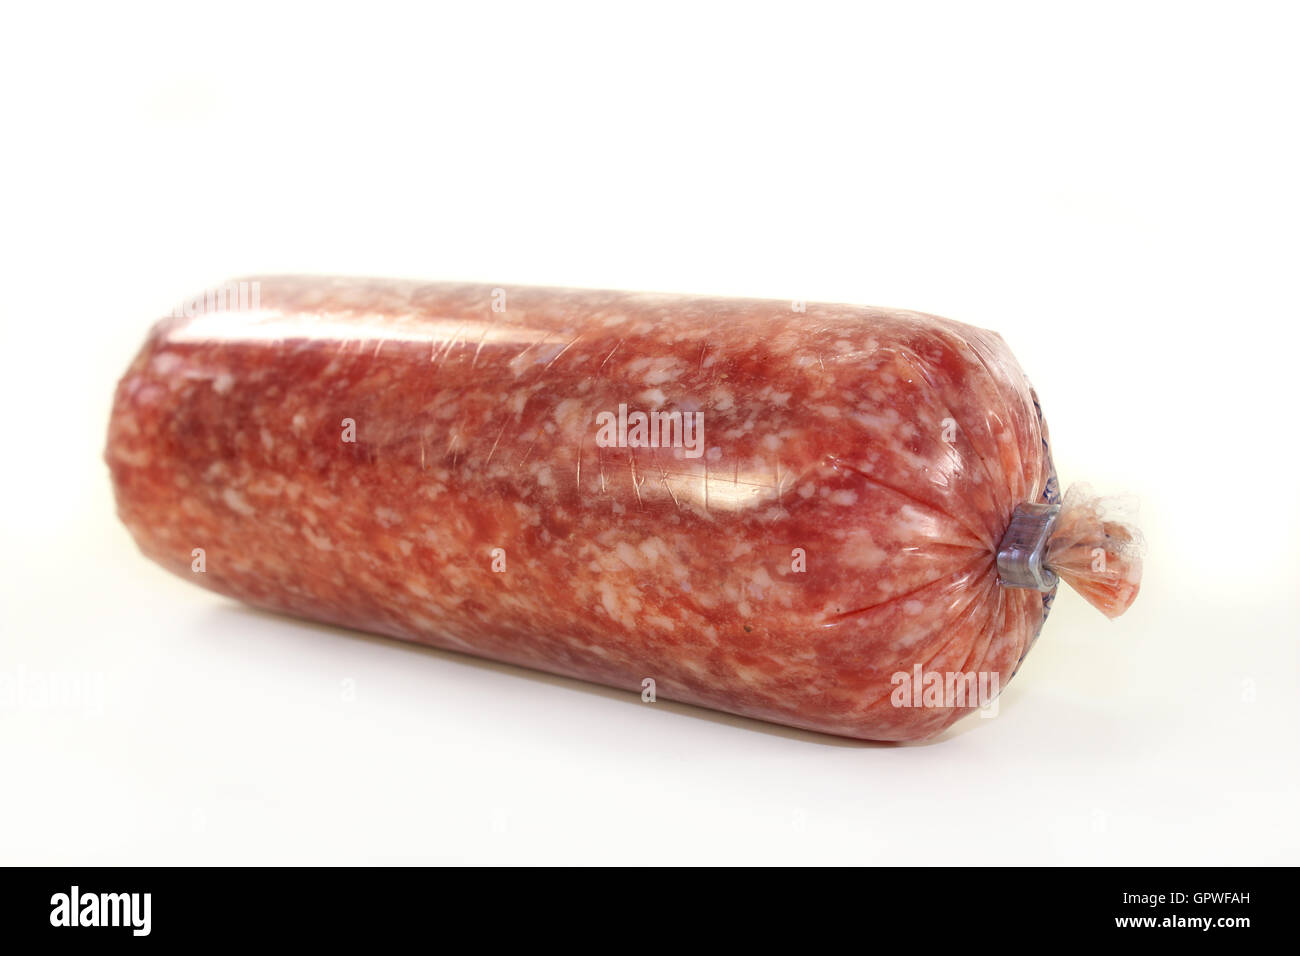 mettwurst sausage Stock Photo